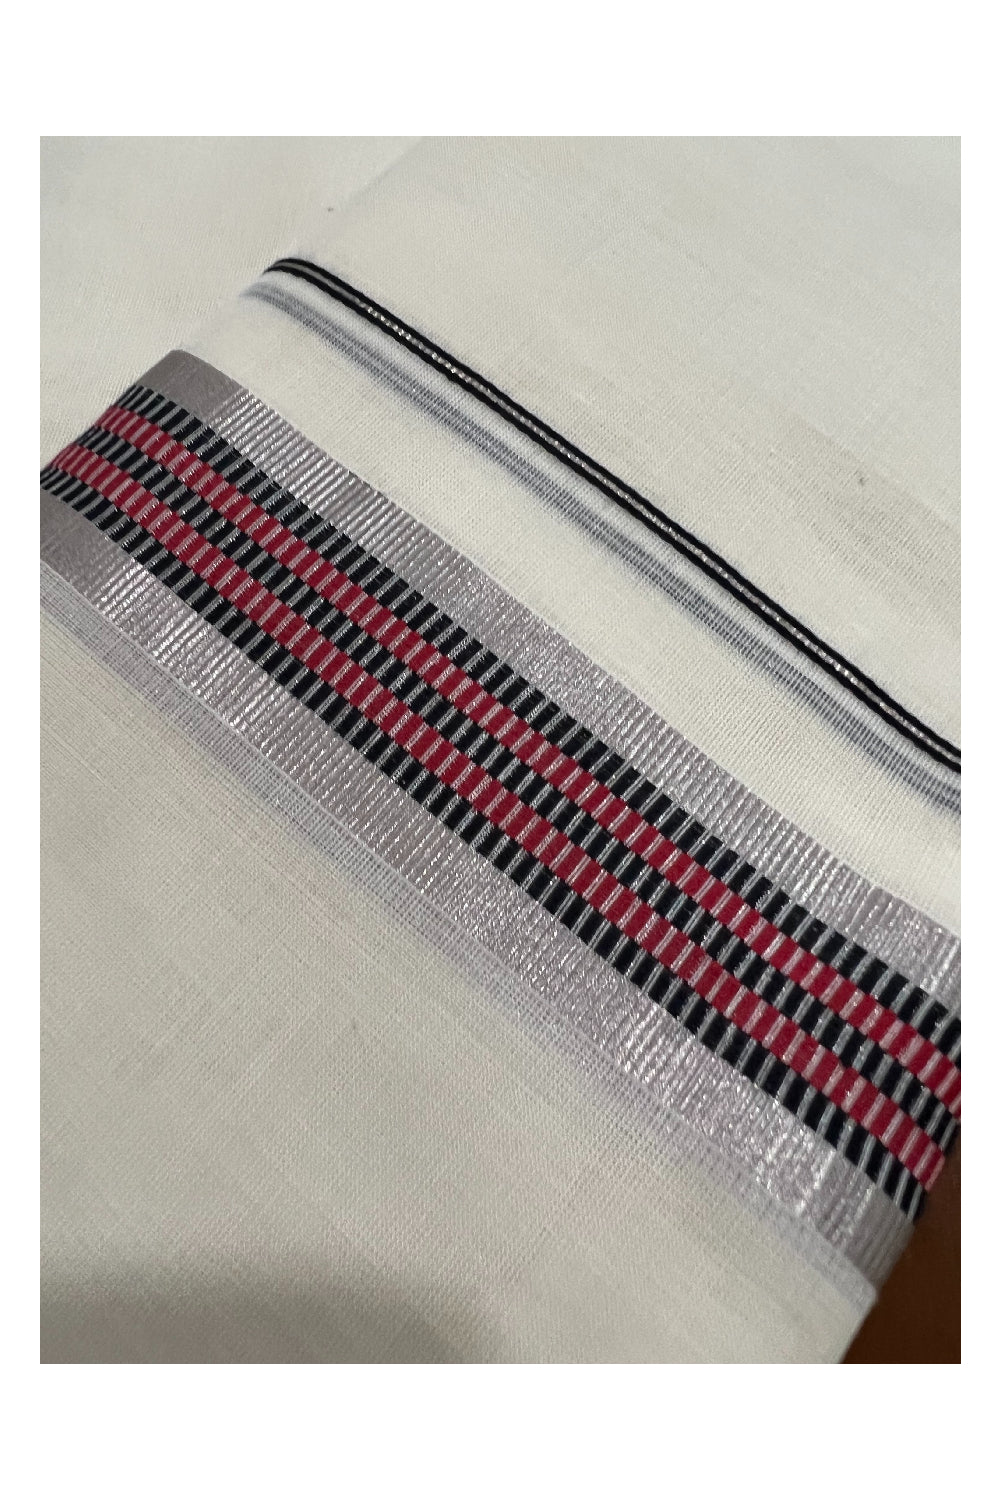 Southloom Premium Handloom Set Mundu with Silver Kasavu and Red Black Woven Design Border